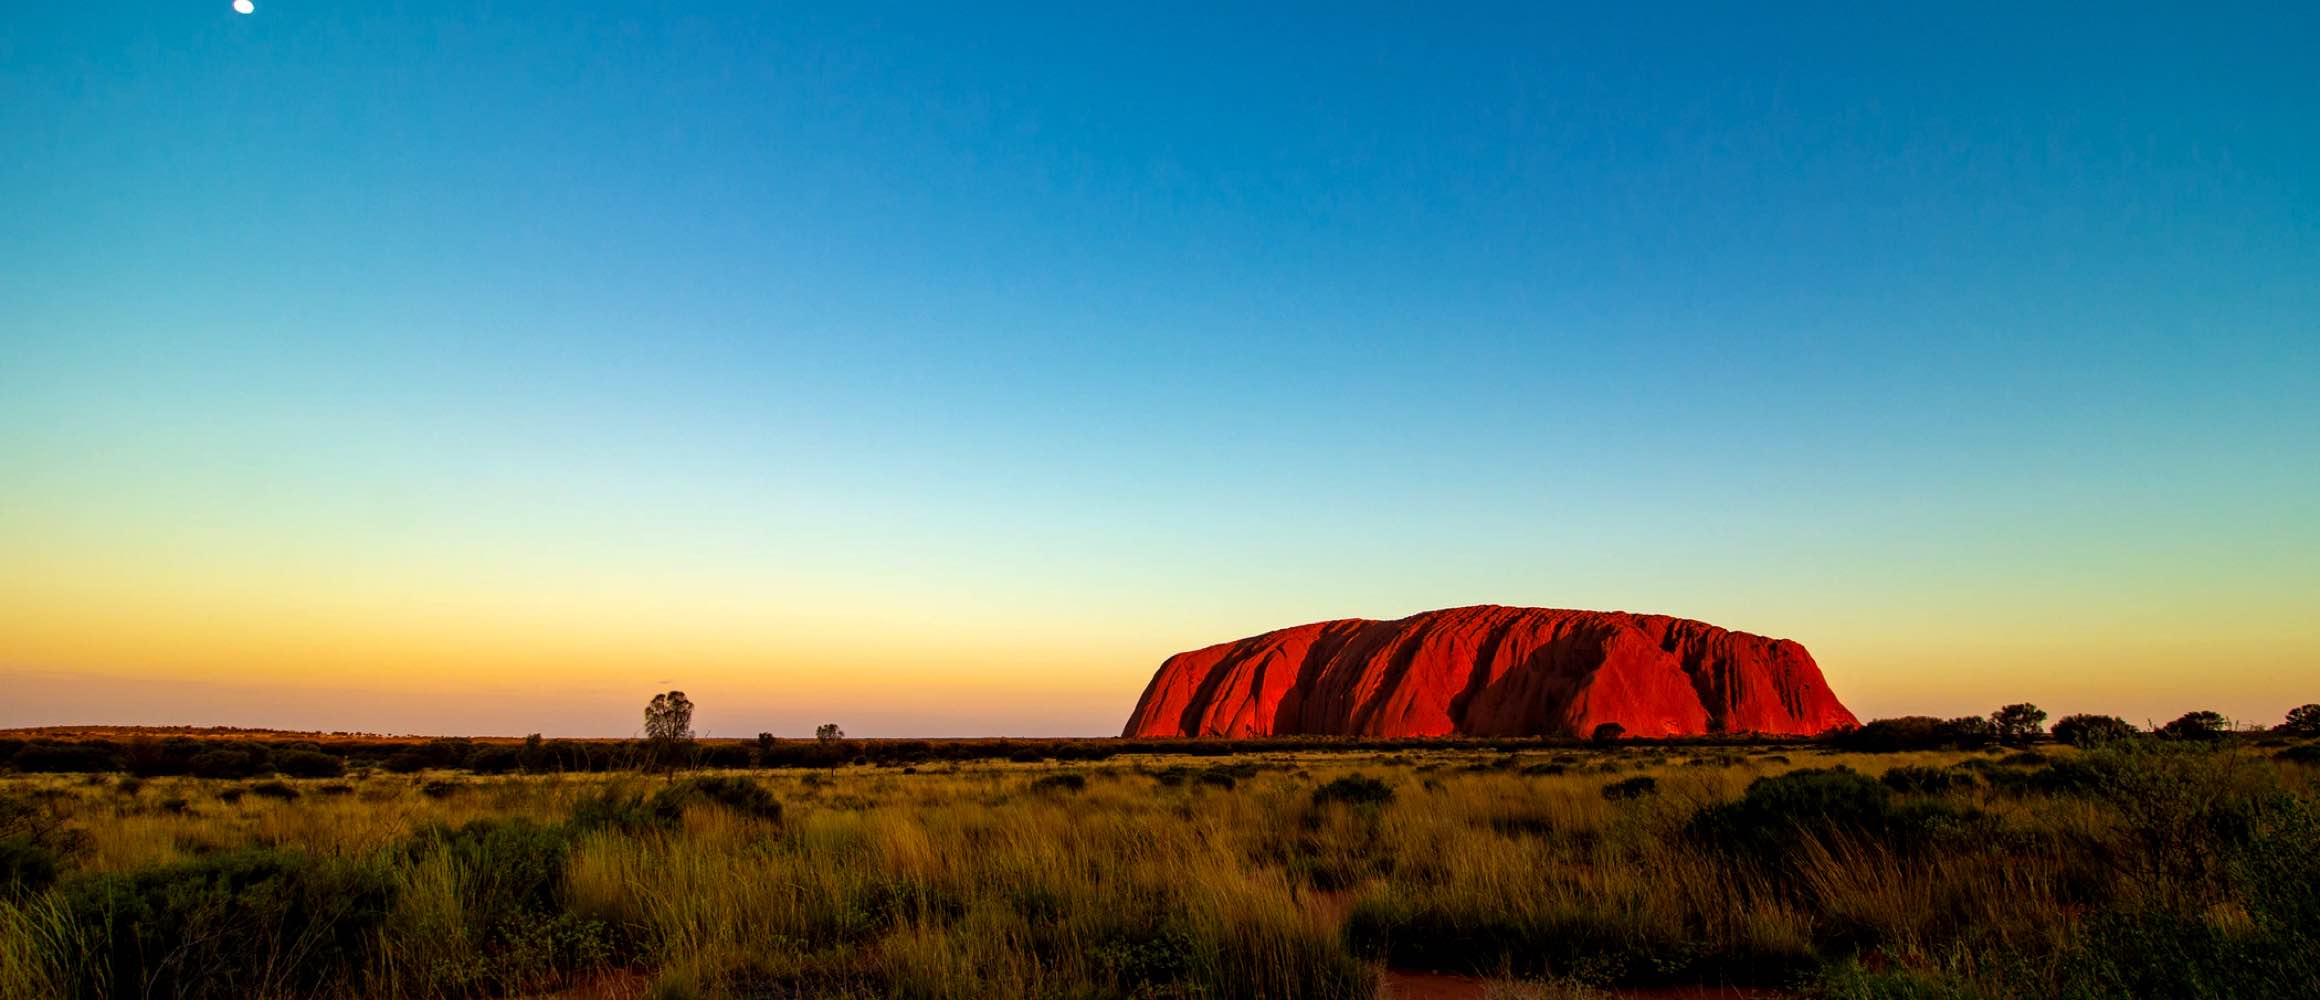 Ayers rock, Australia at Sunset